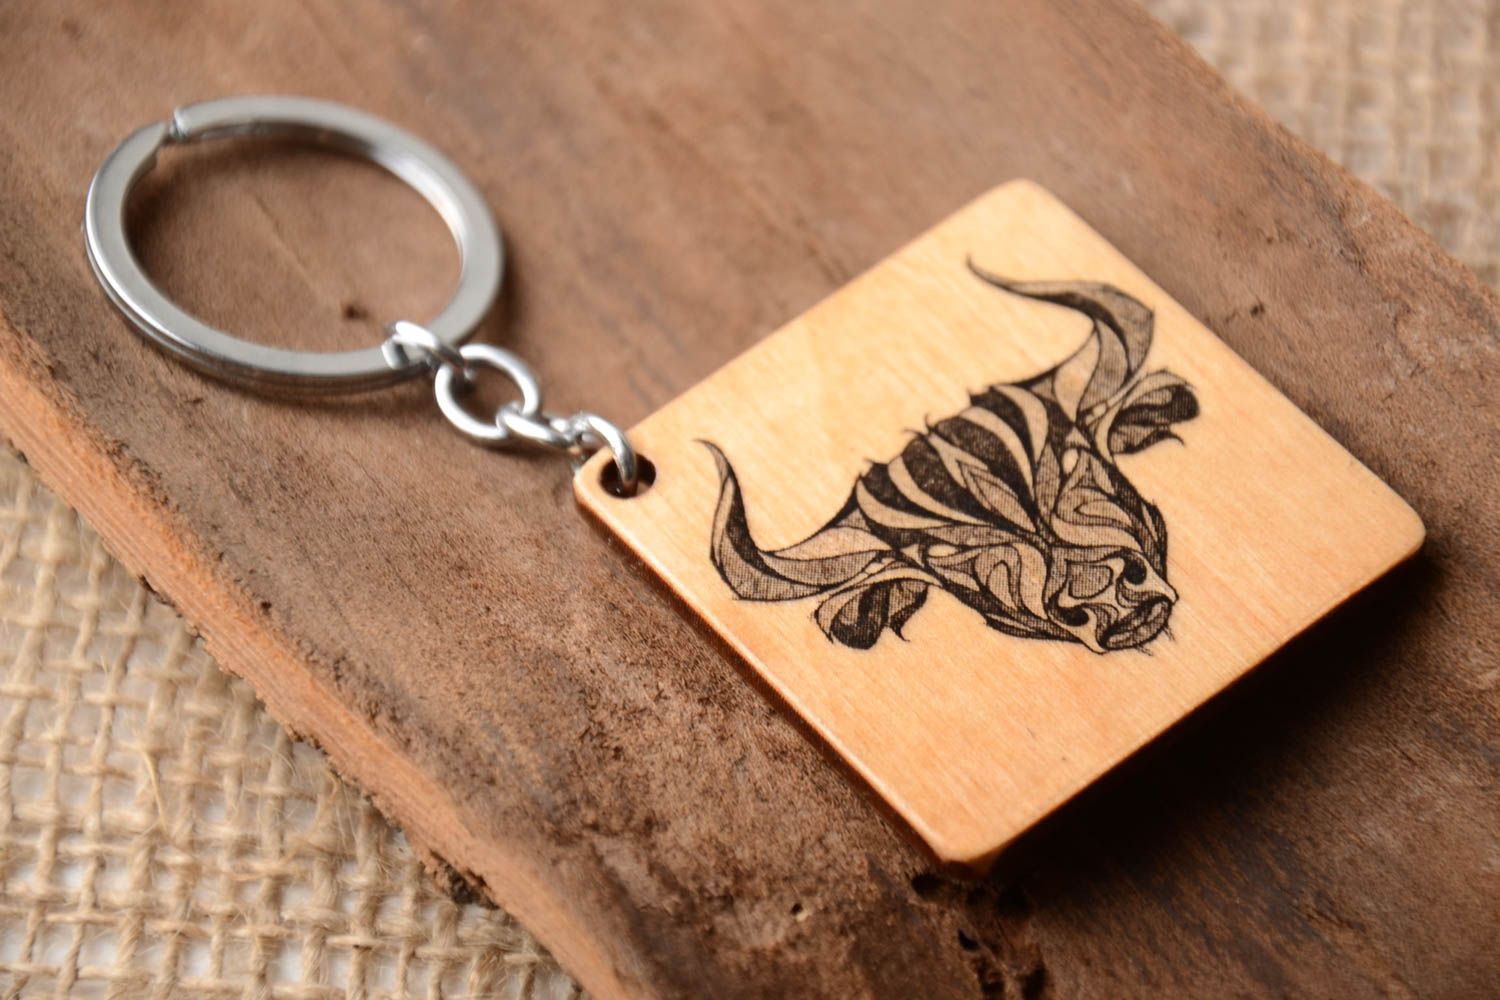 Handmade keychain unusual key accessory gift ideas wooden souvenir unusual gift photo 1